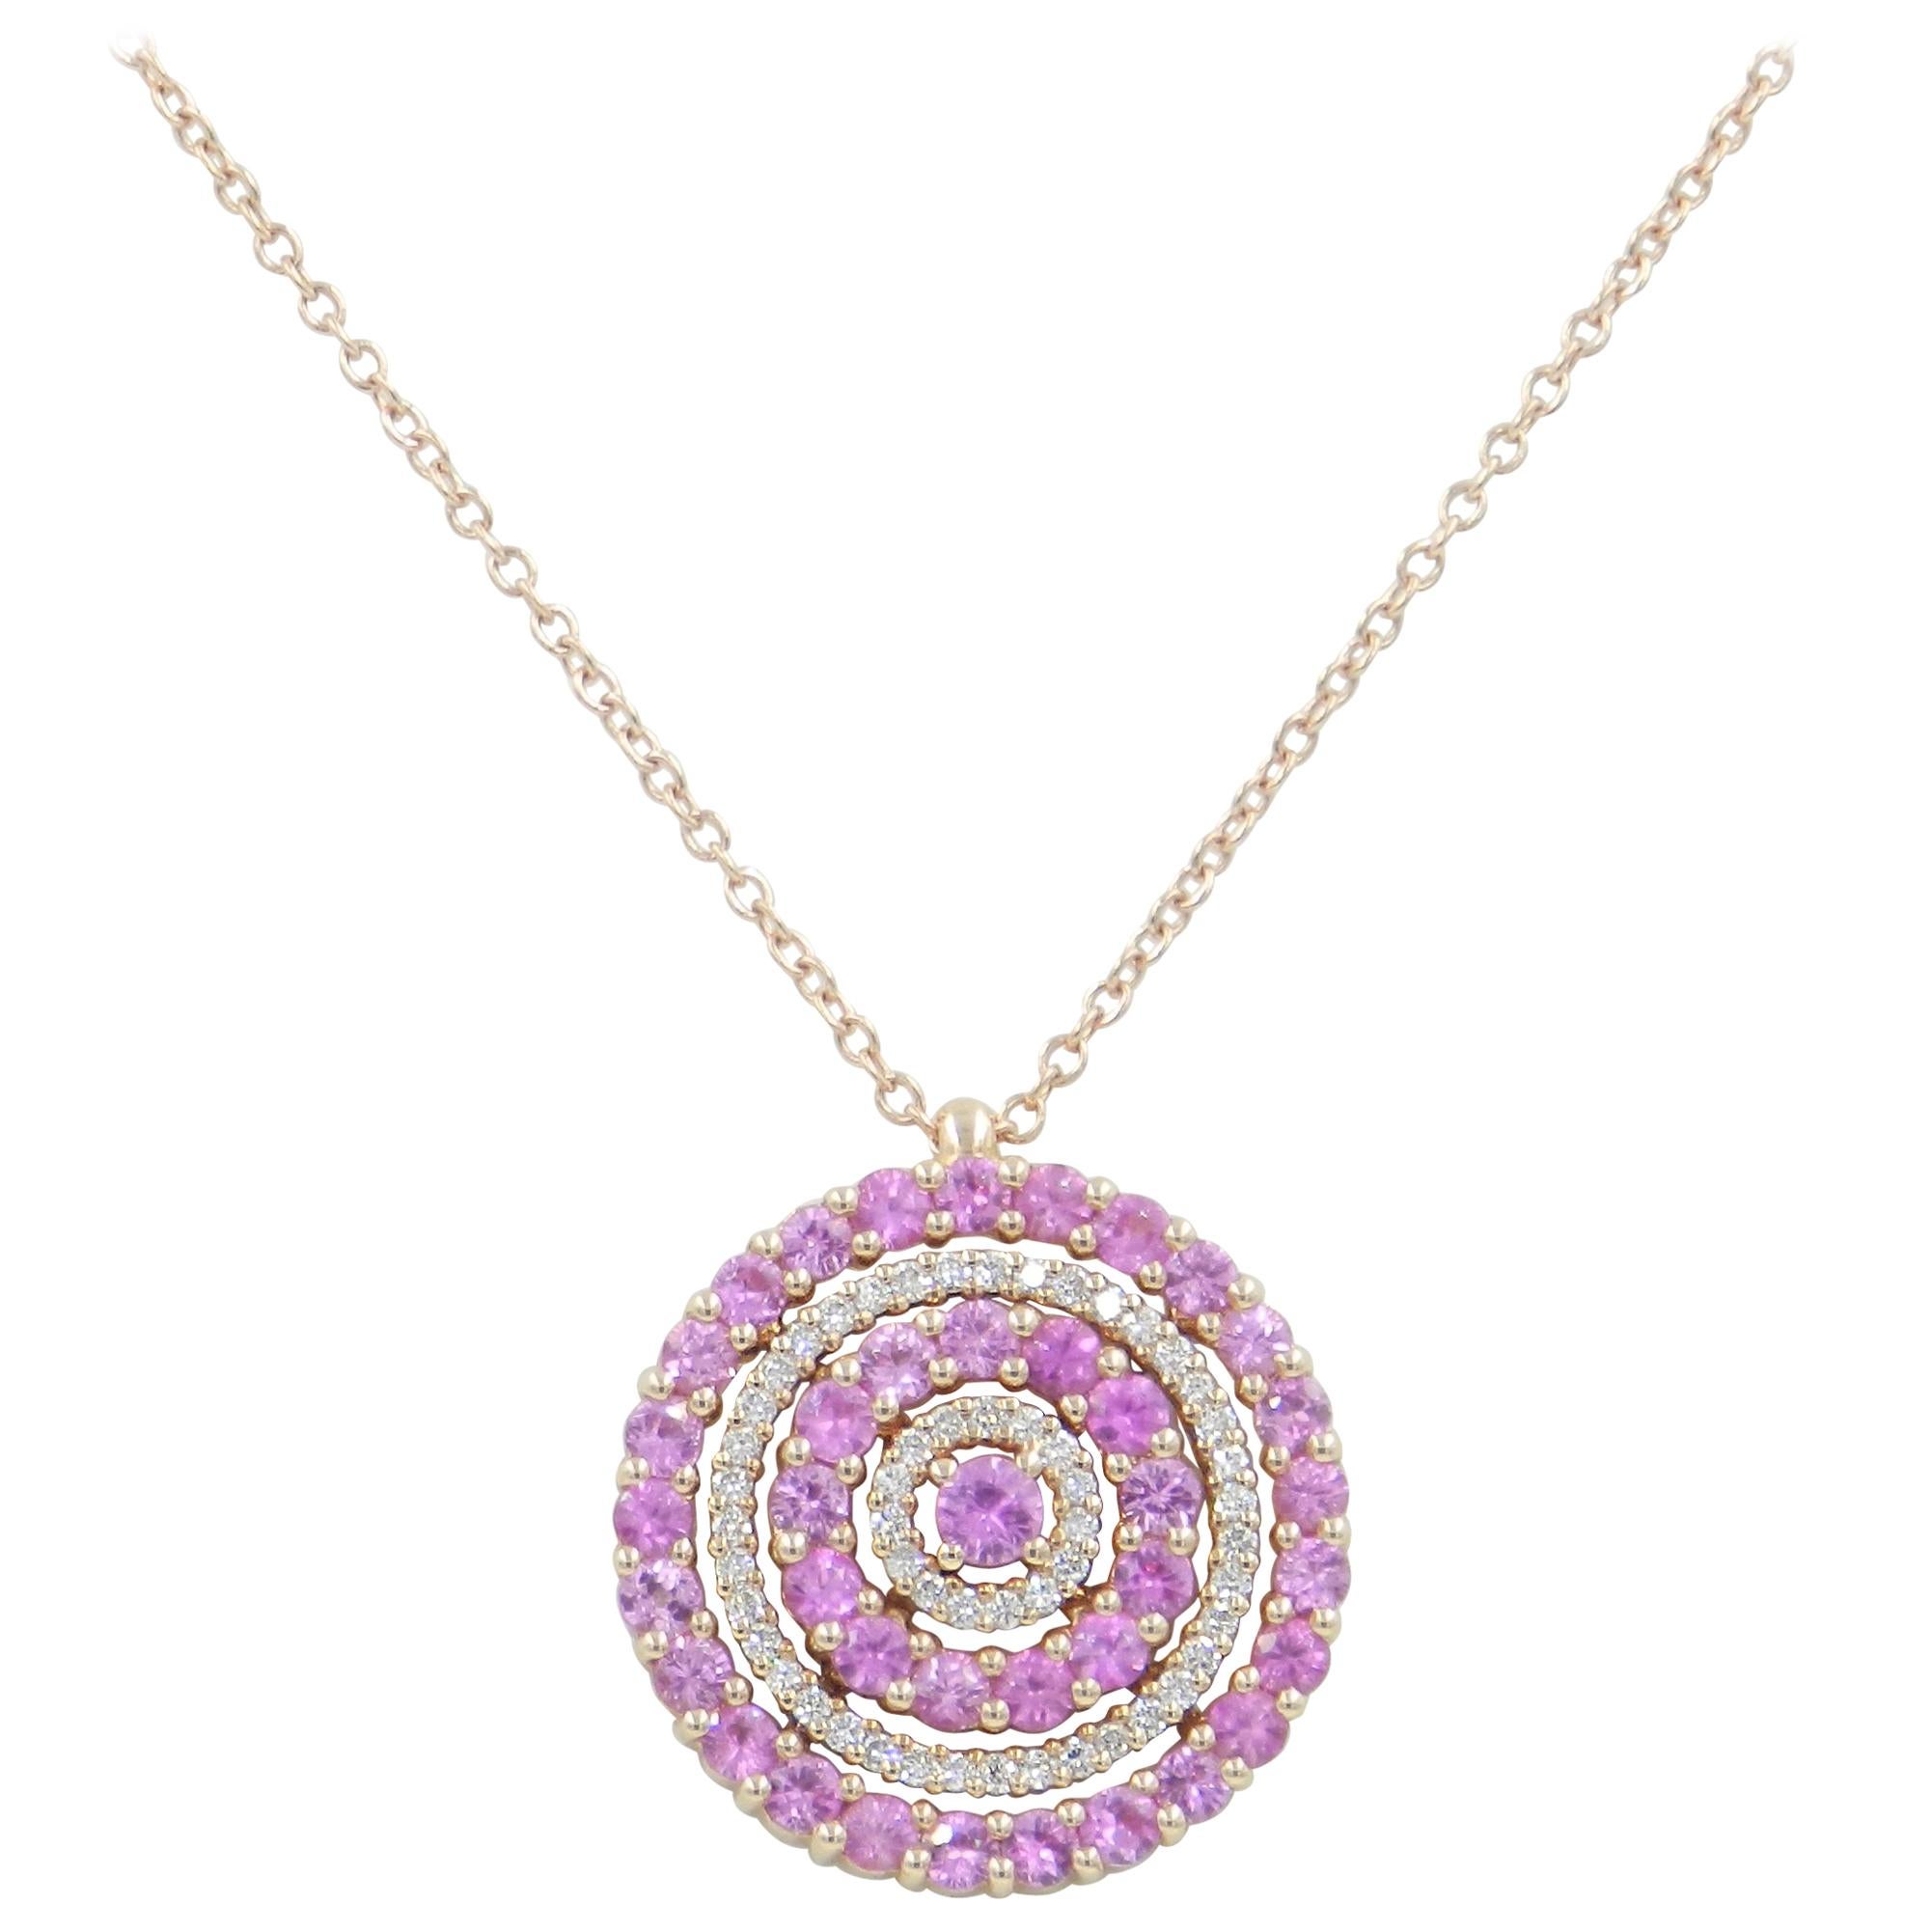 18 Karat Gold White Diamonds and Pink Sapphires Garavelli Pendant with Chain